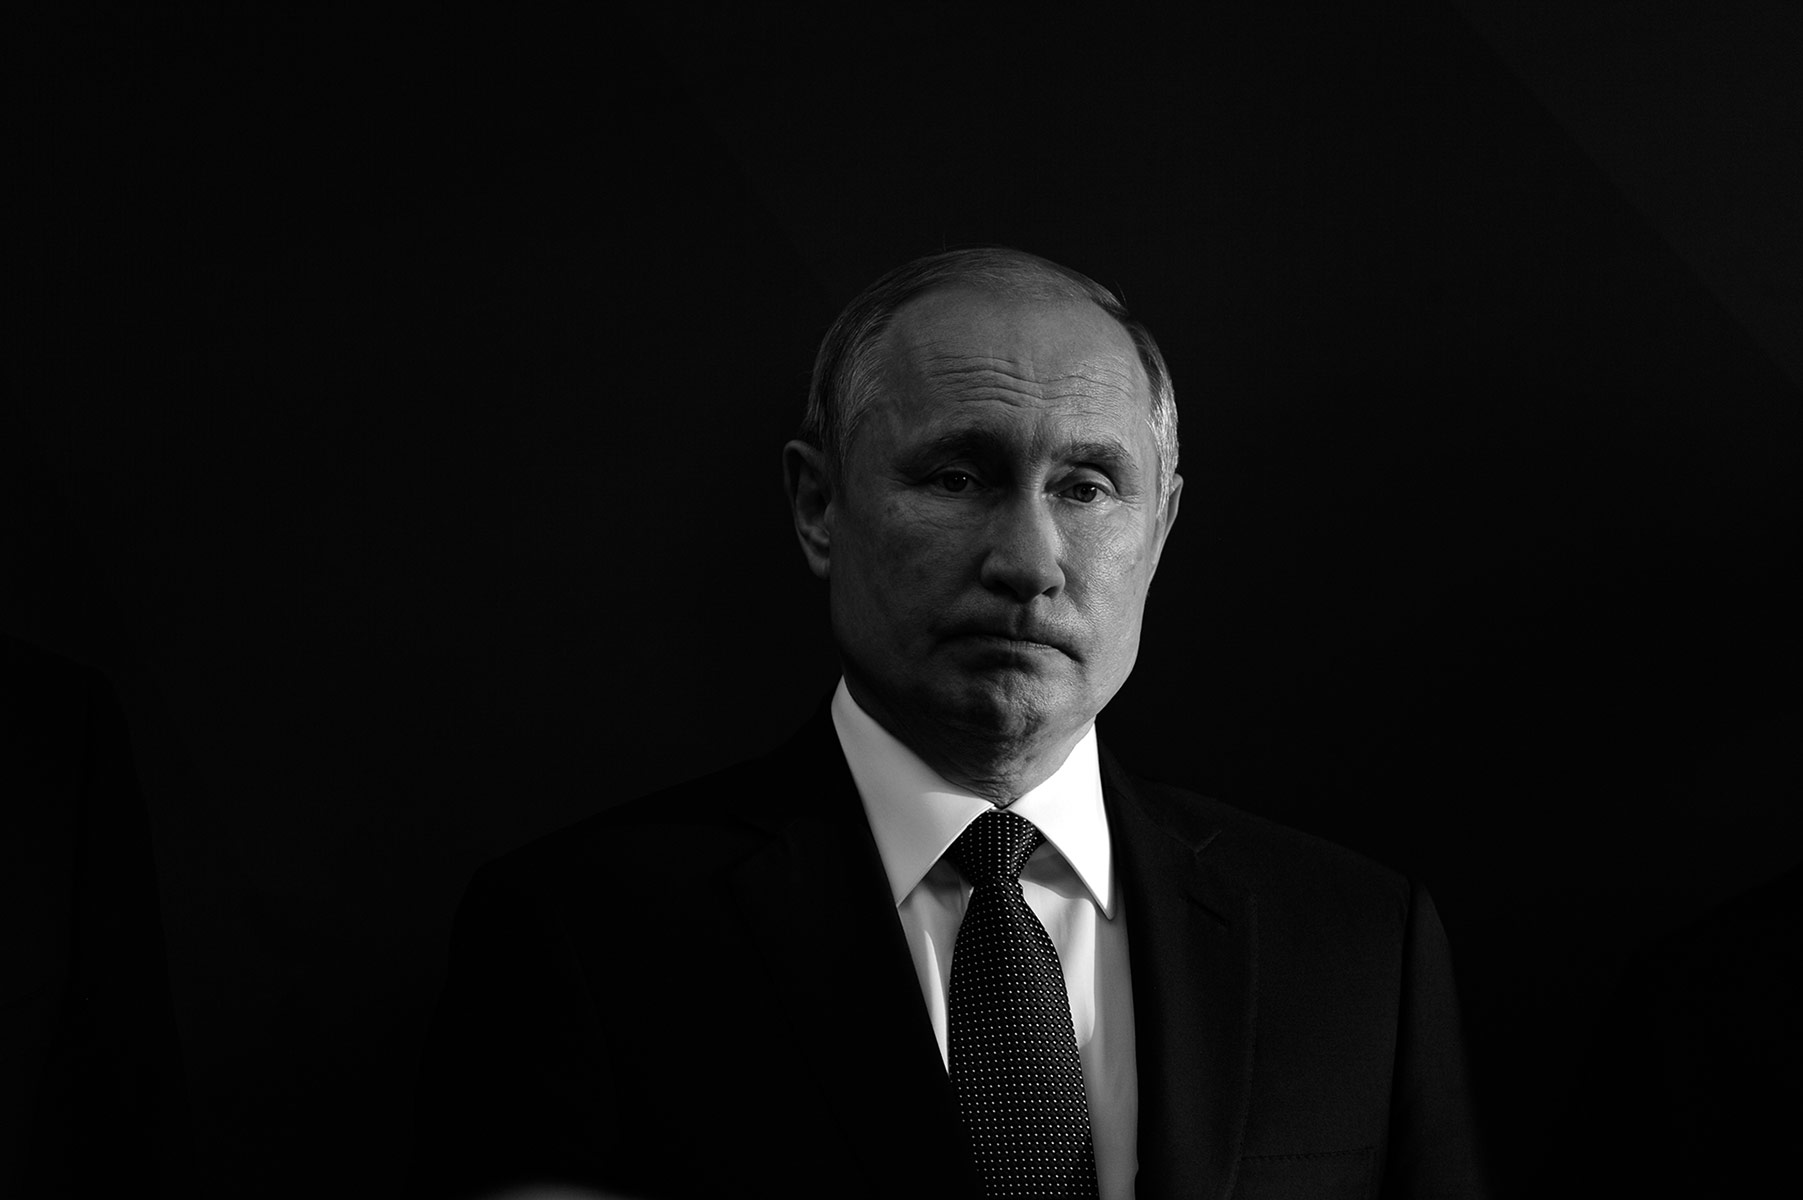 Putin.